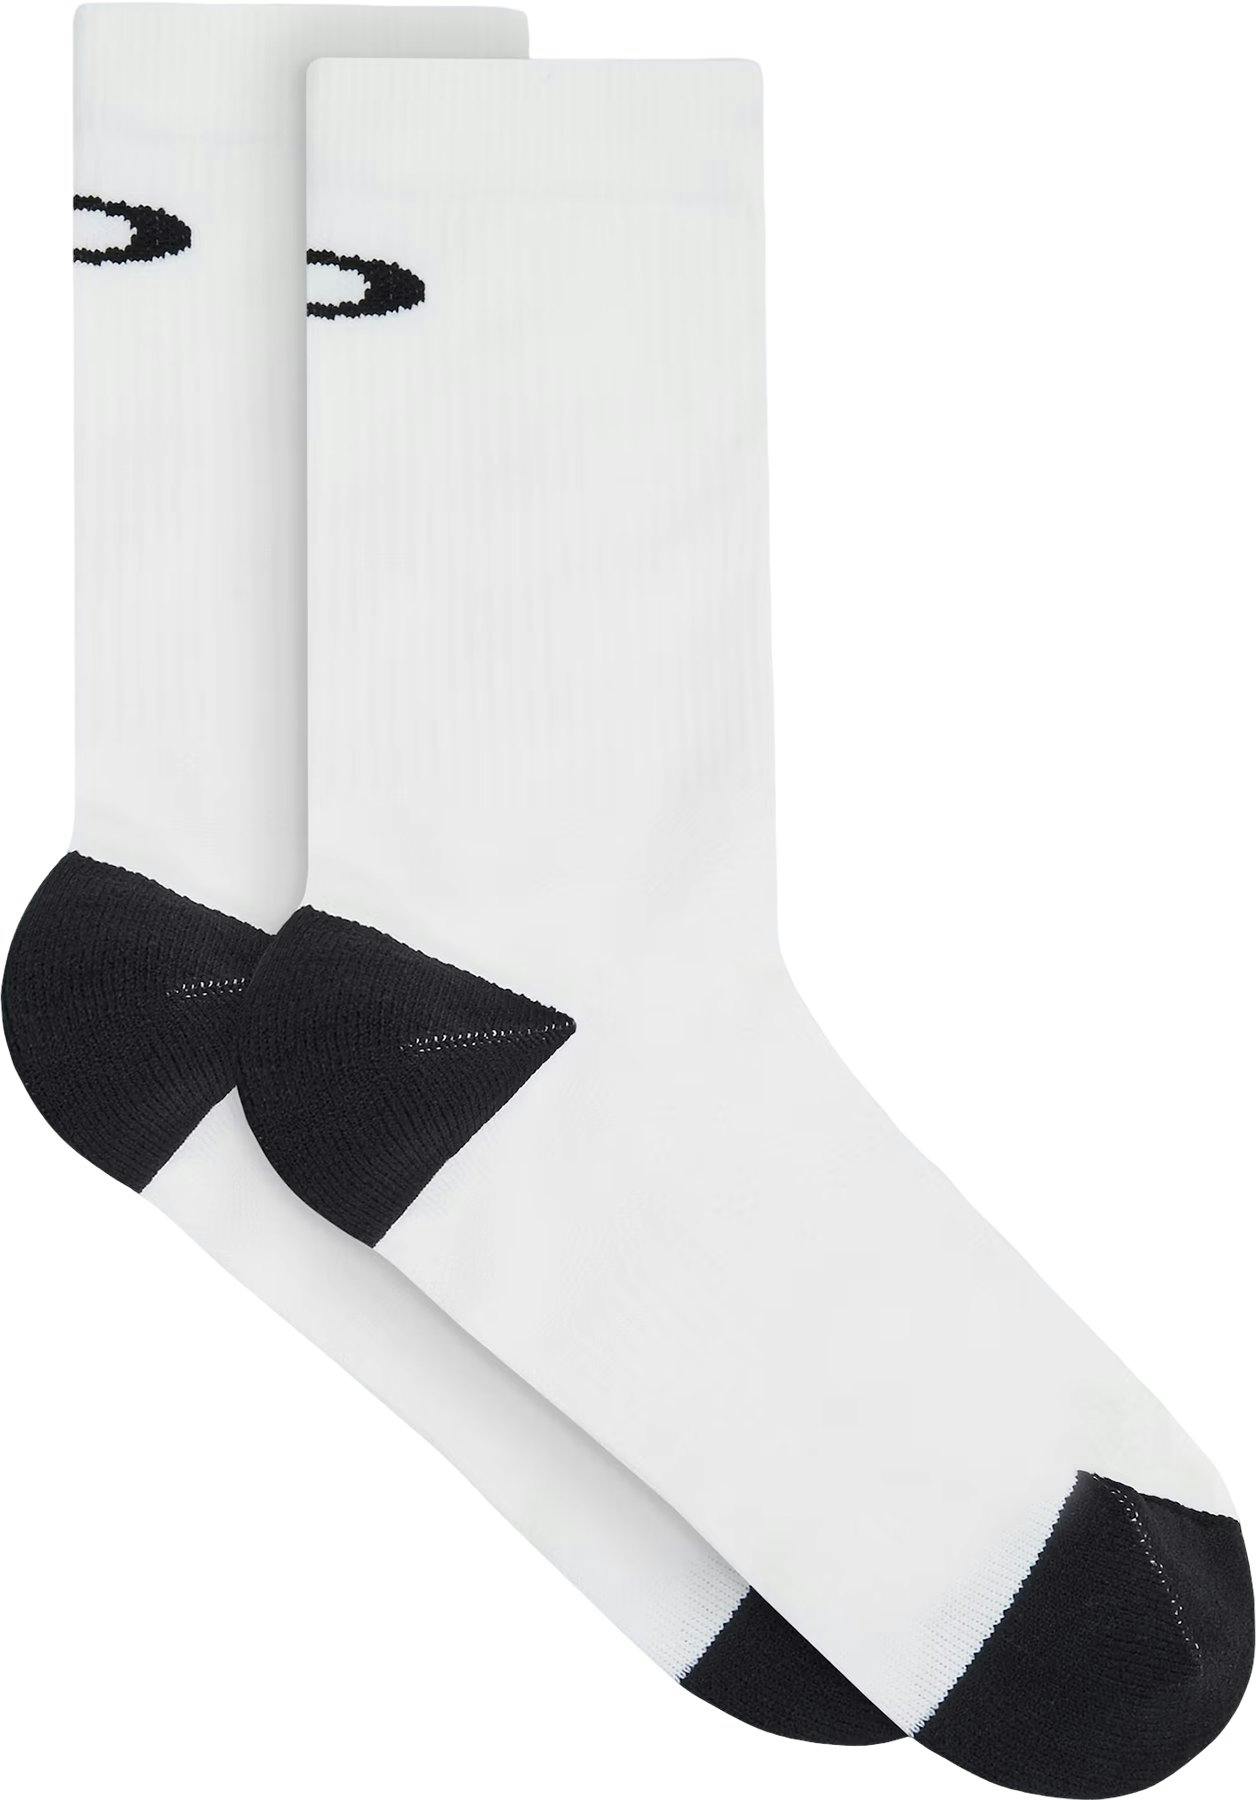 Product image for Ribbed Ellipse Long Socks - Men's